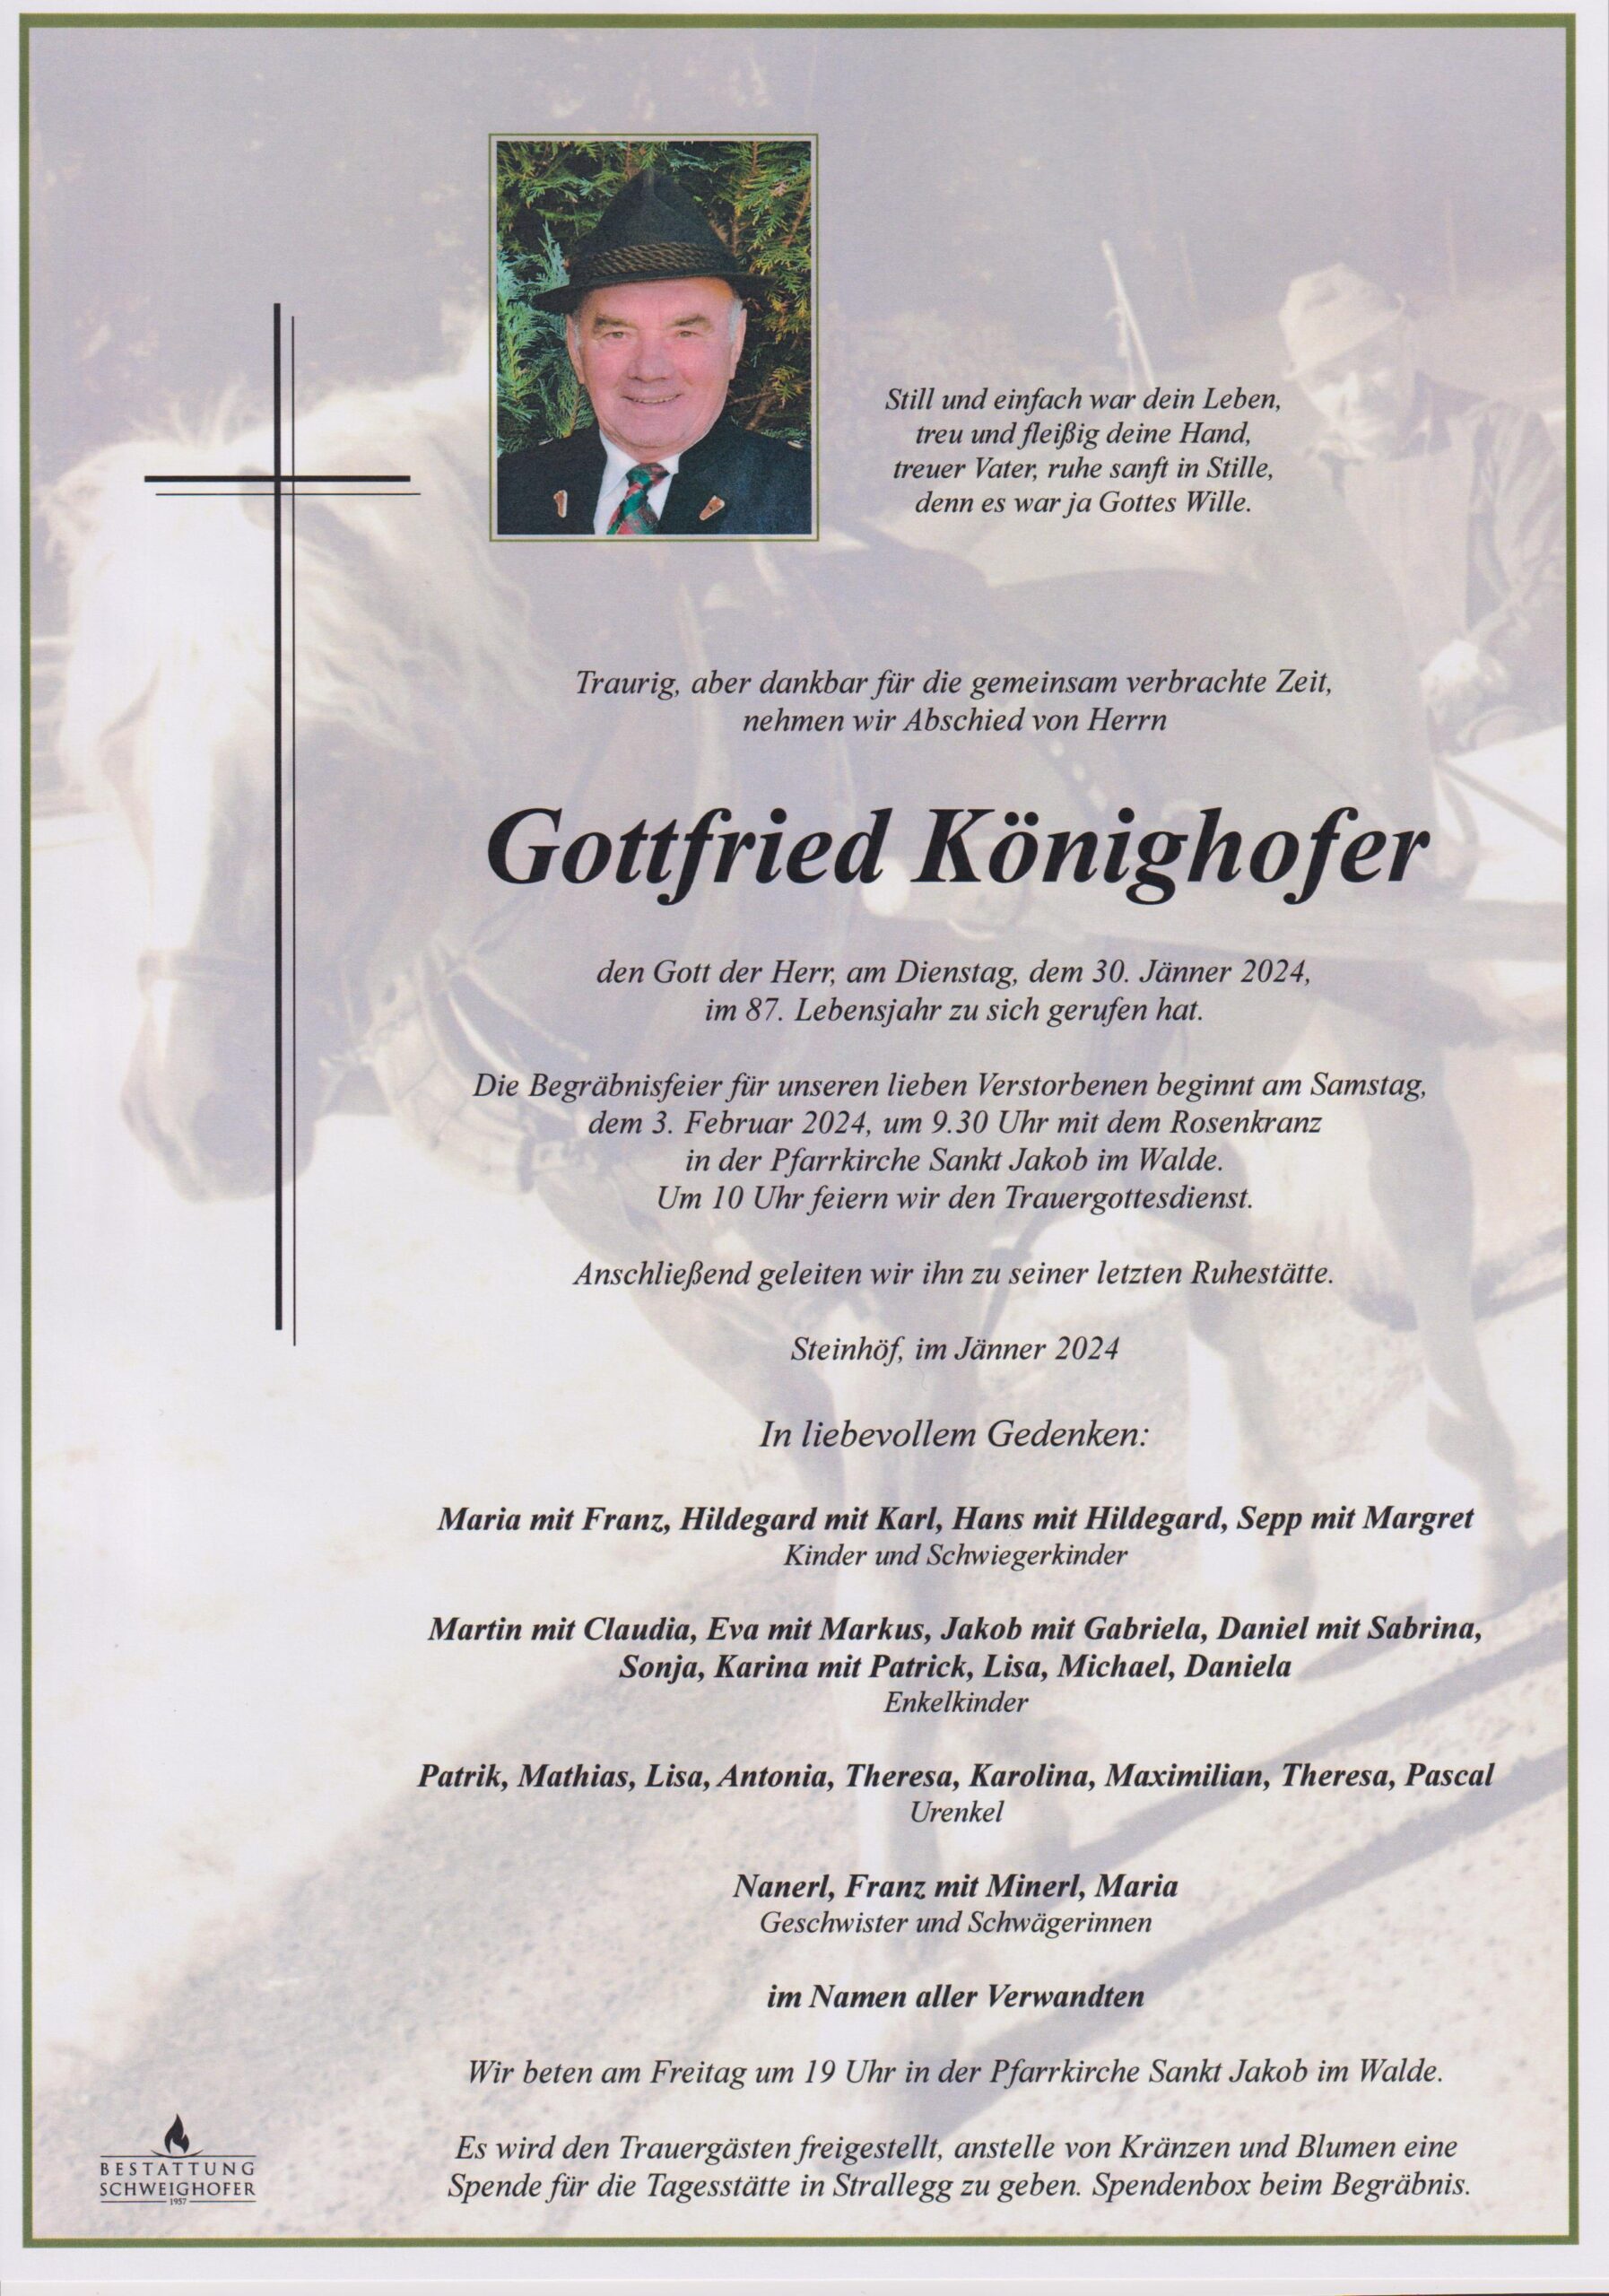 Gottfried Könighofer